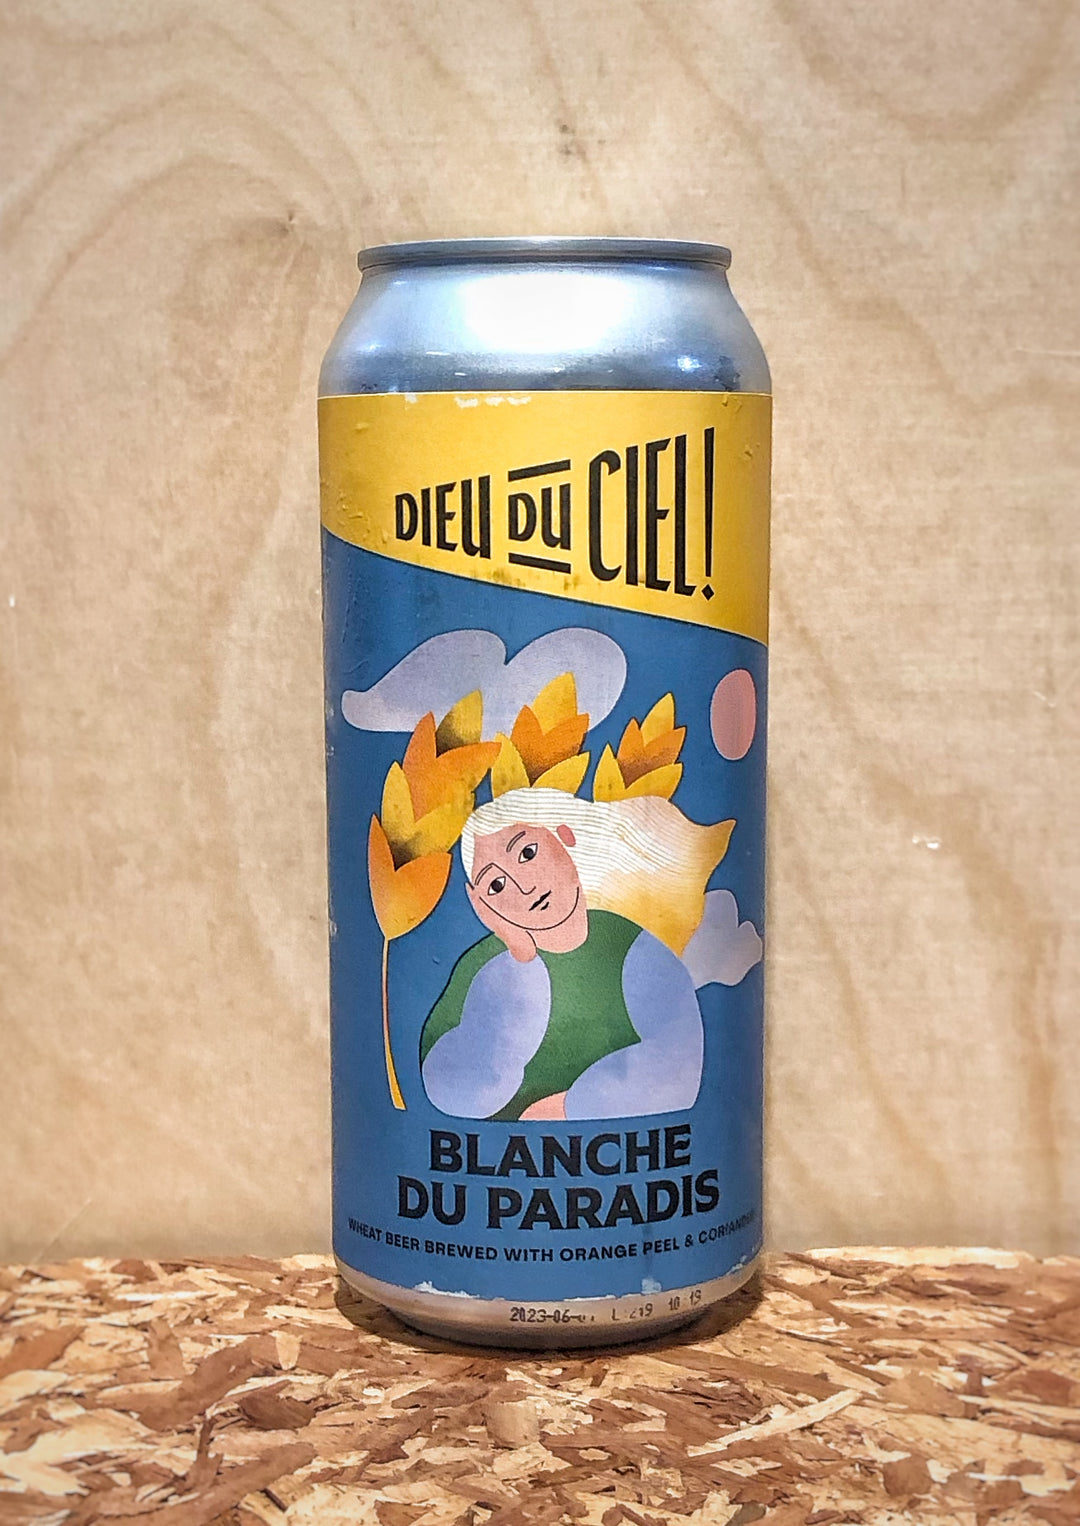 Brasserie Diue du Ciel! 'Blanche de Paradis' Wheat Beer brewed with Orange Peel & Coriander (Montreal, QC, Canada)